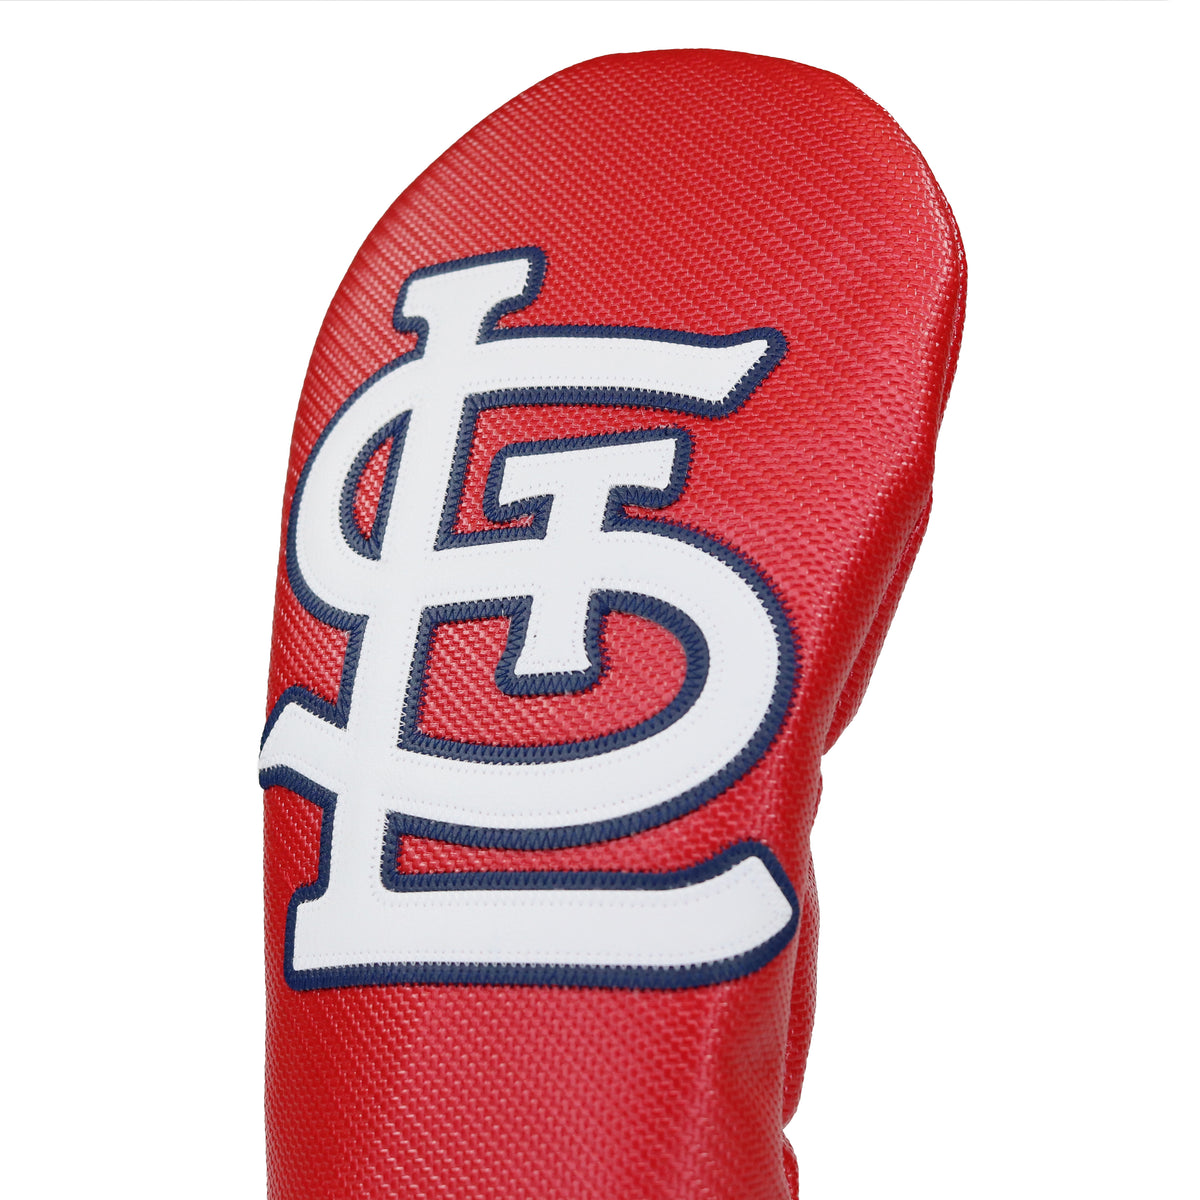 St. Louis Cardinals Golf Bag, Cardinals Head Covers, Sports